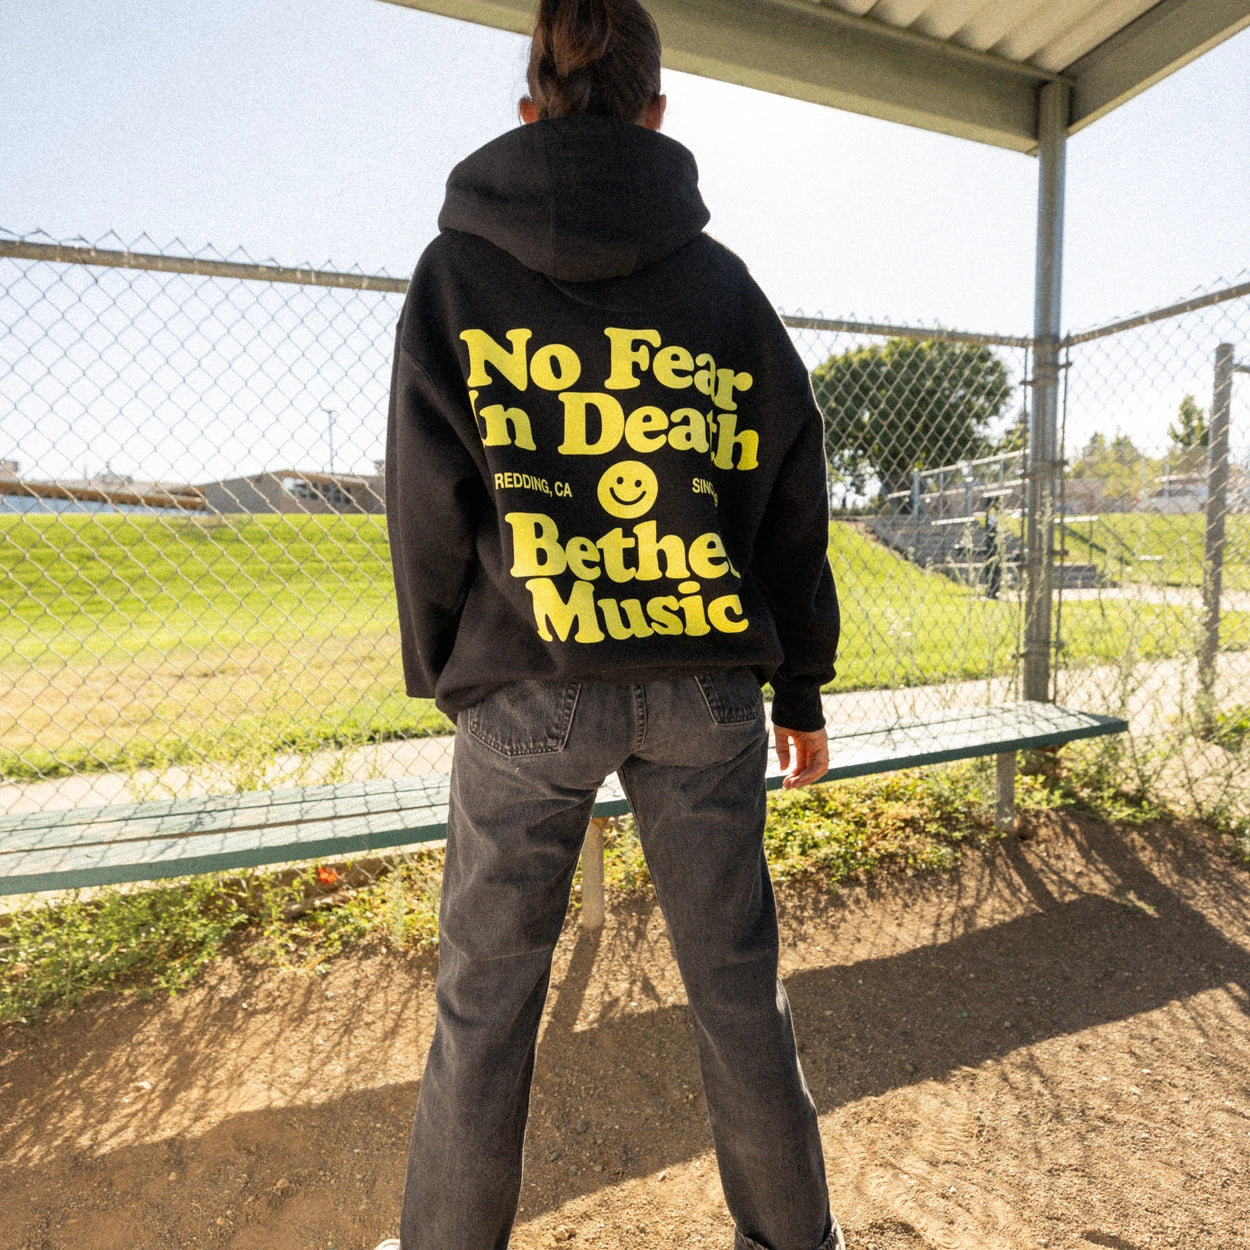 DEATH FEAR HOODIE Store IN – NO Music Bethel